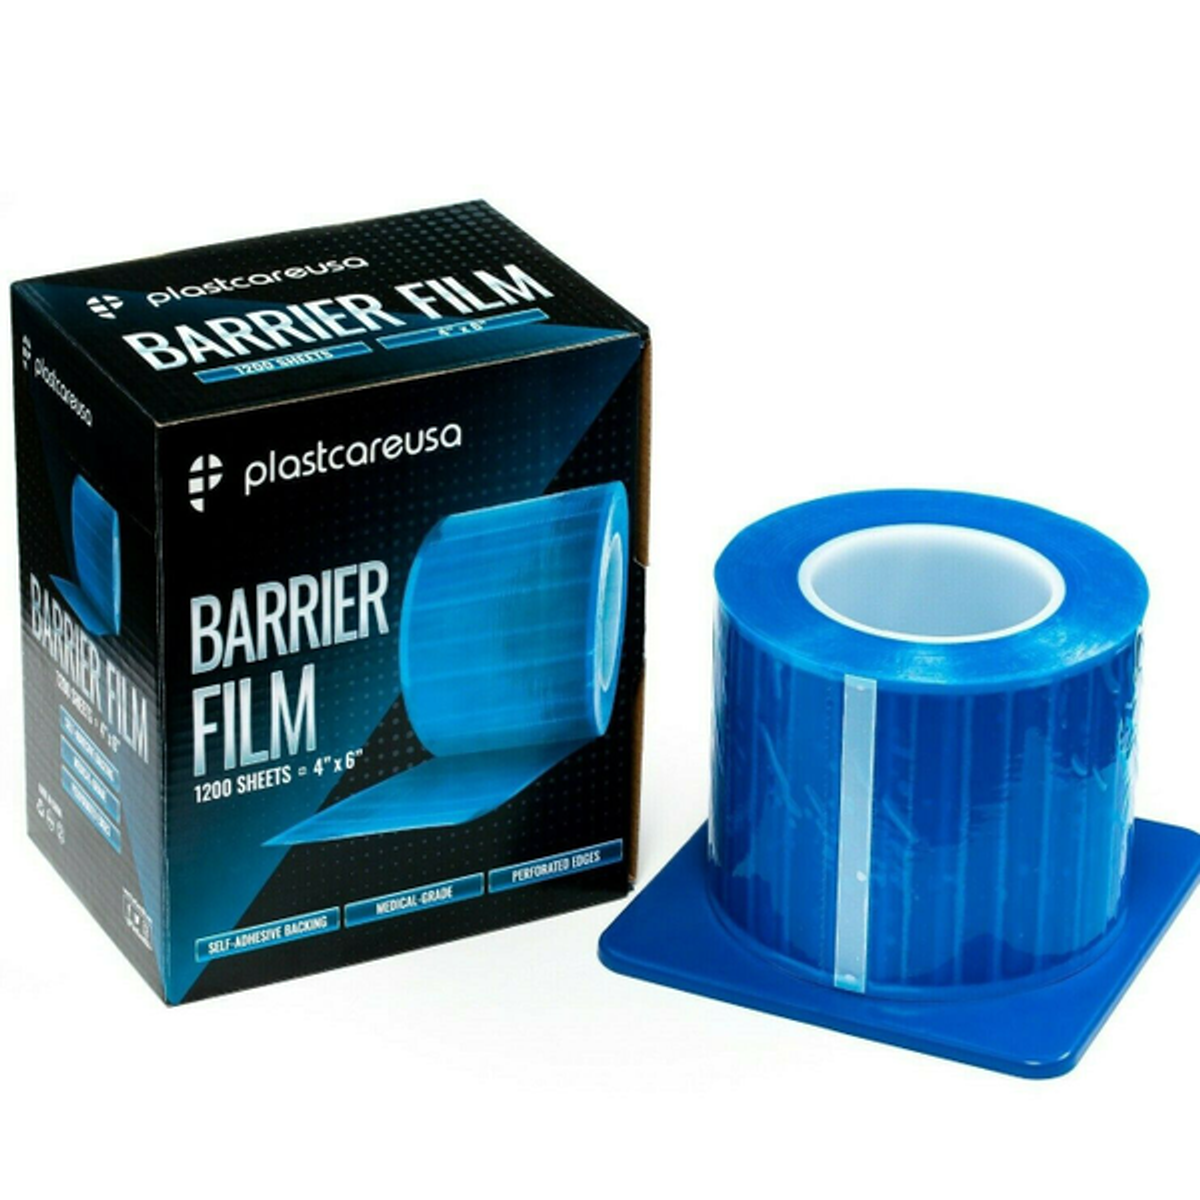 Barrier Film, 4" x 6", 1200 Sheets - Blue